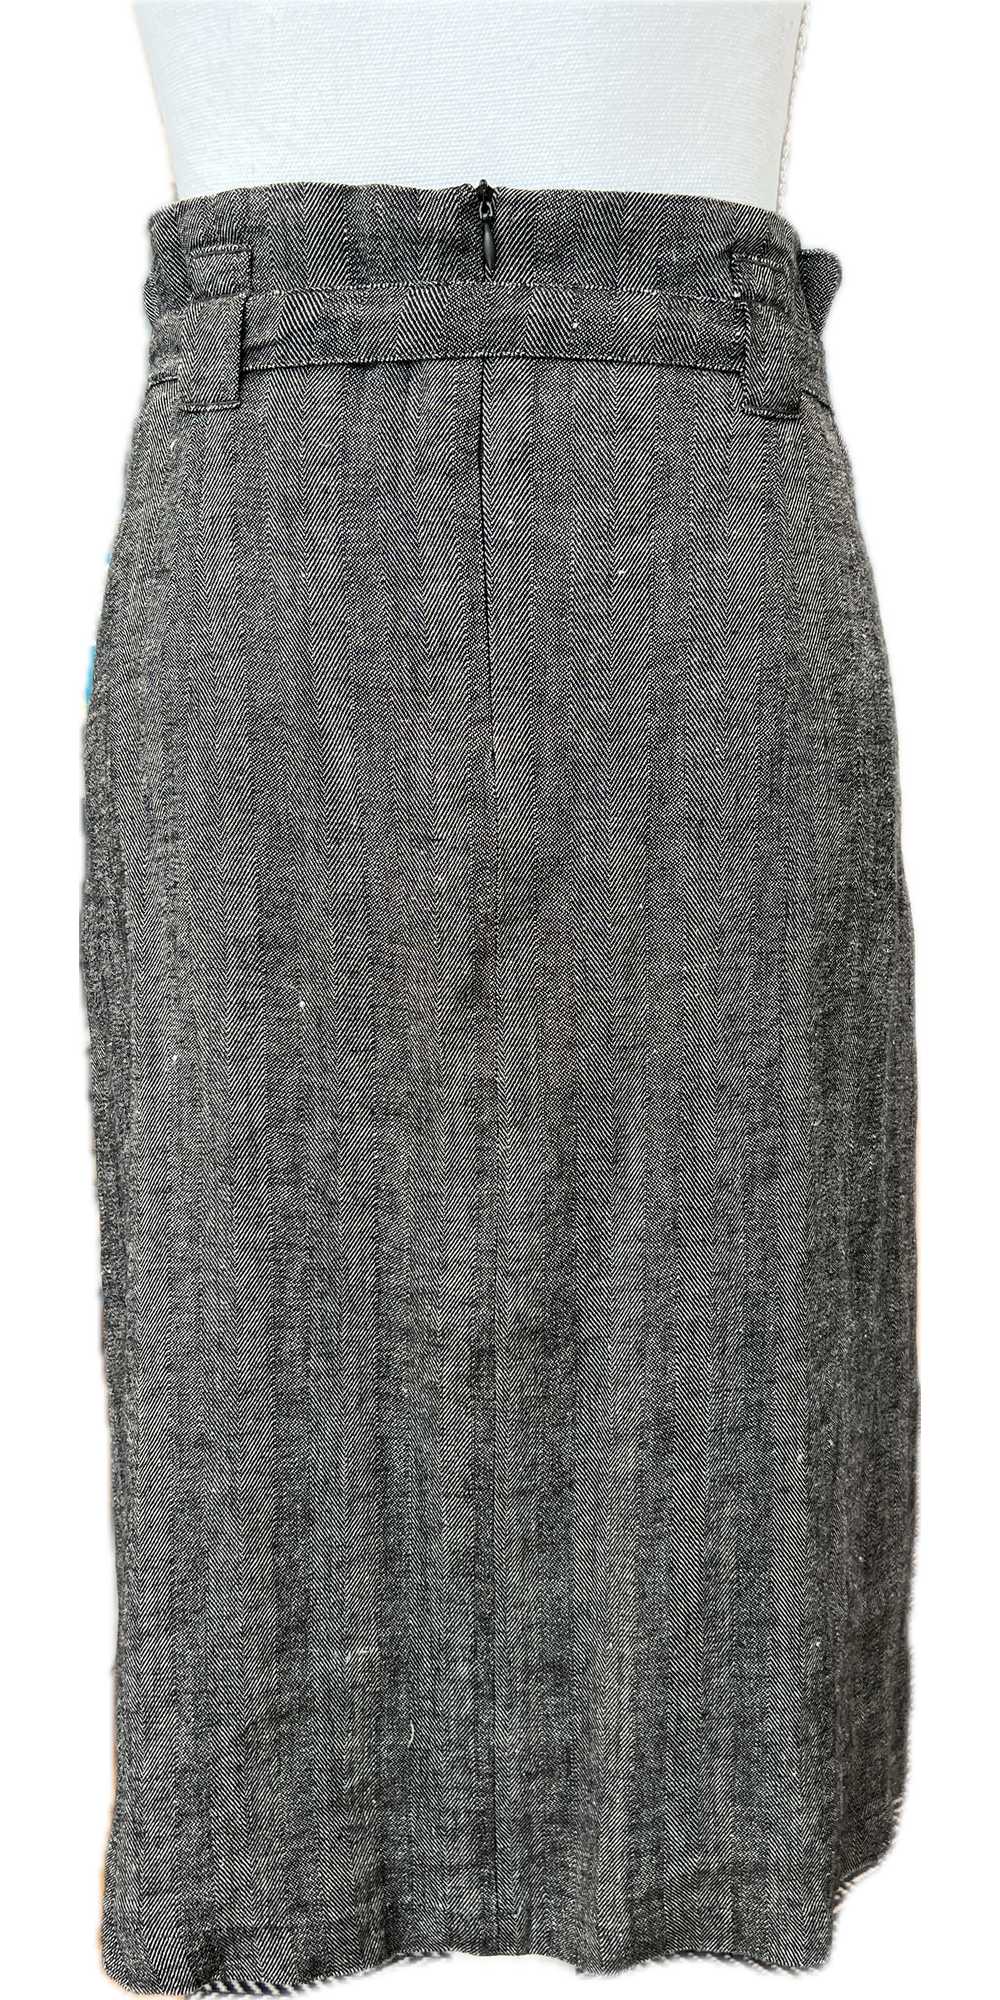 Cotélac Black and Tan Linen Blend Belted Skirt, 0 - image 3